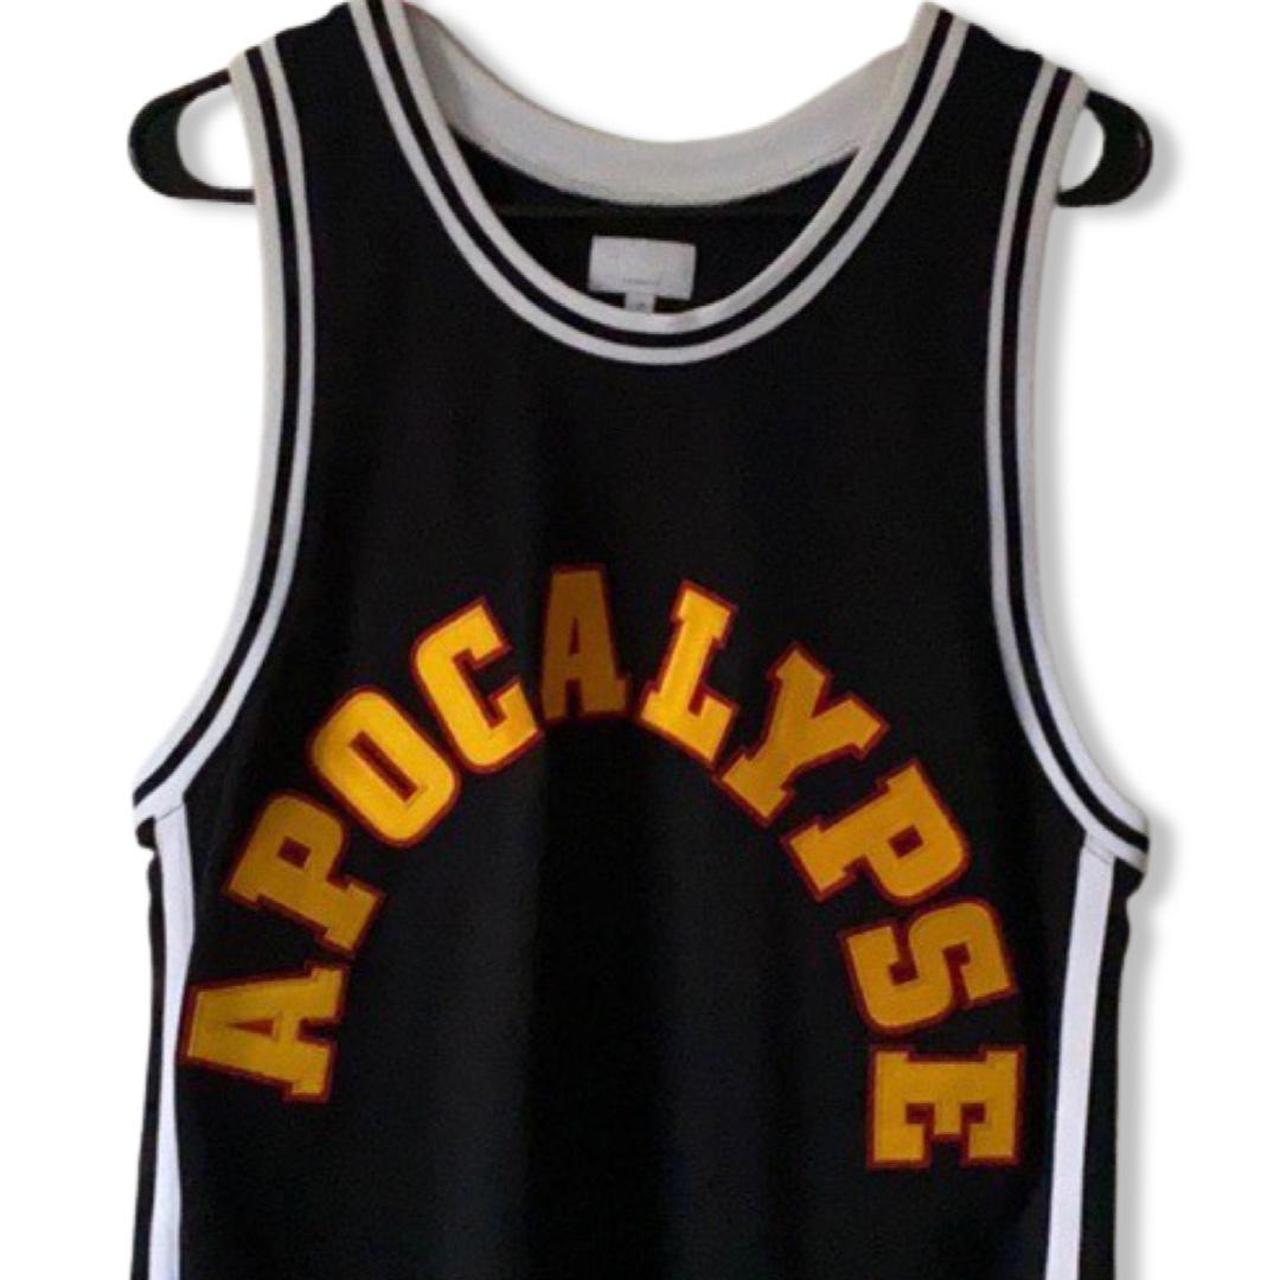 Authentic Supreme “Apocalypse” Basketball Jersey.